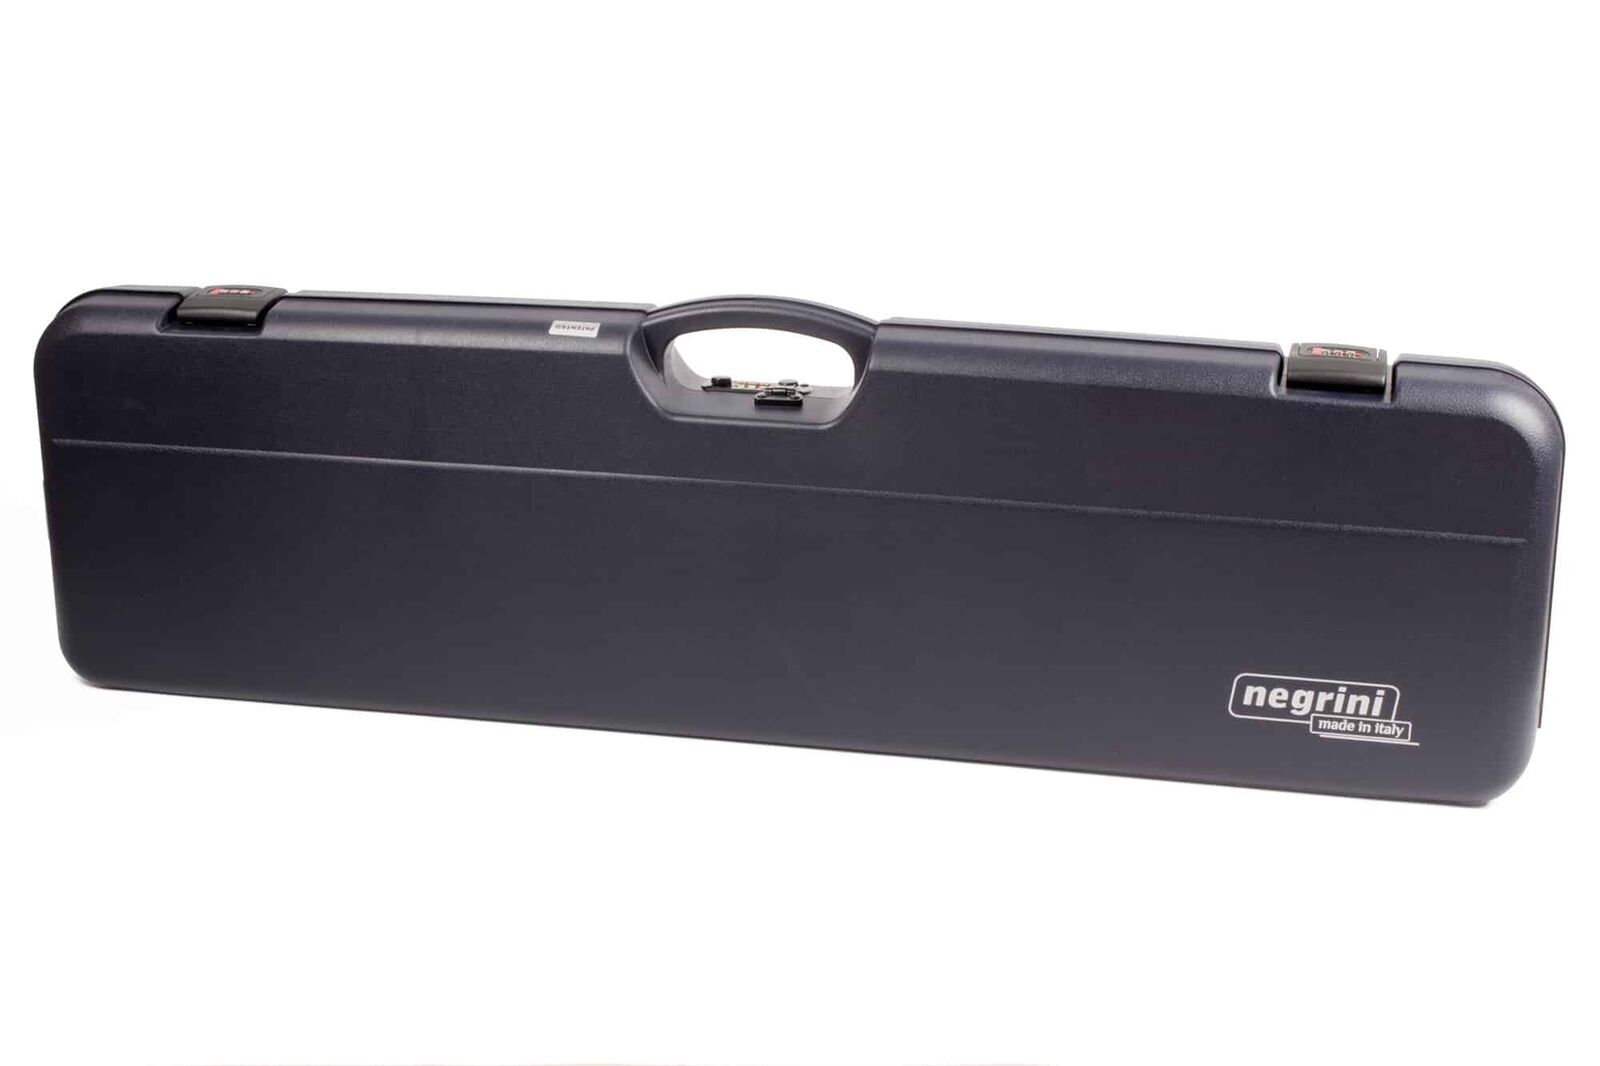 Negrini Semi-Auto Shotgun Combo Branded goods Ranking TOP20 1603iA-2C Case - 5170